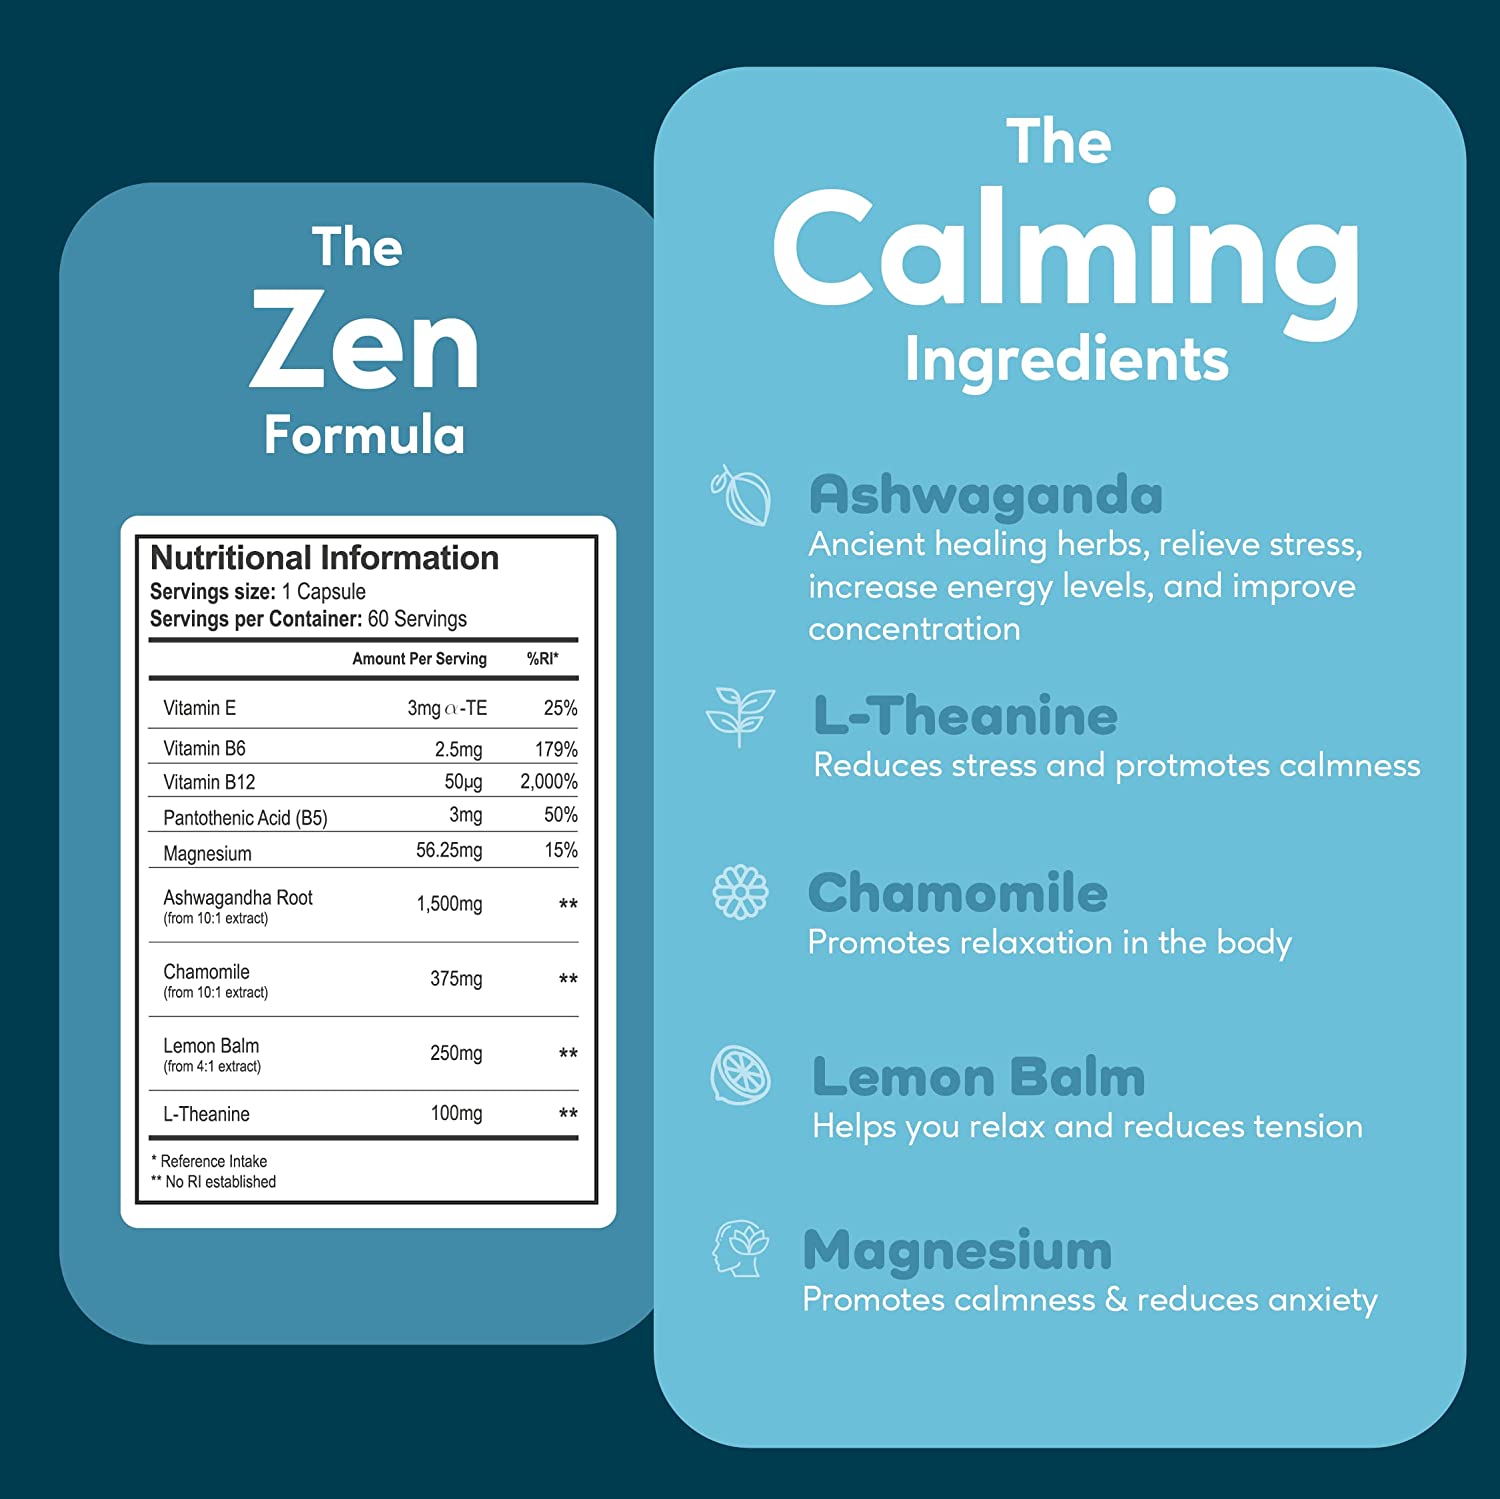 Genius Zen Natural Stress & Anxiety Relief